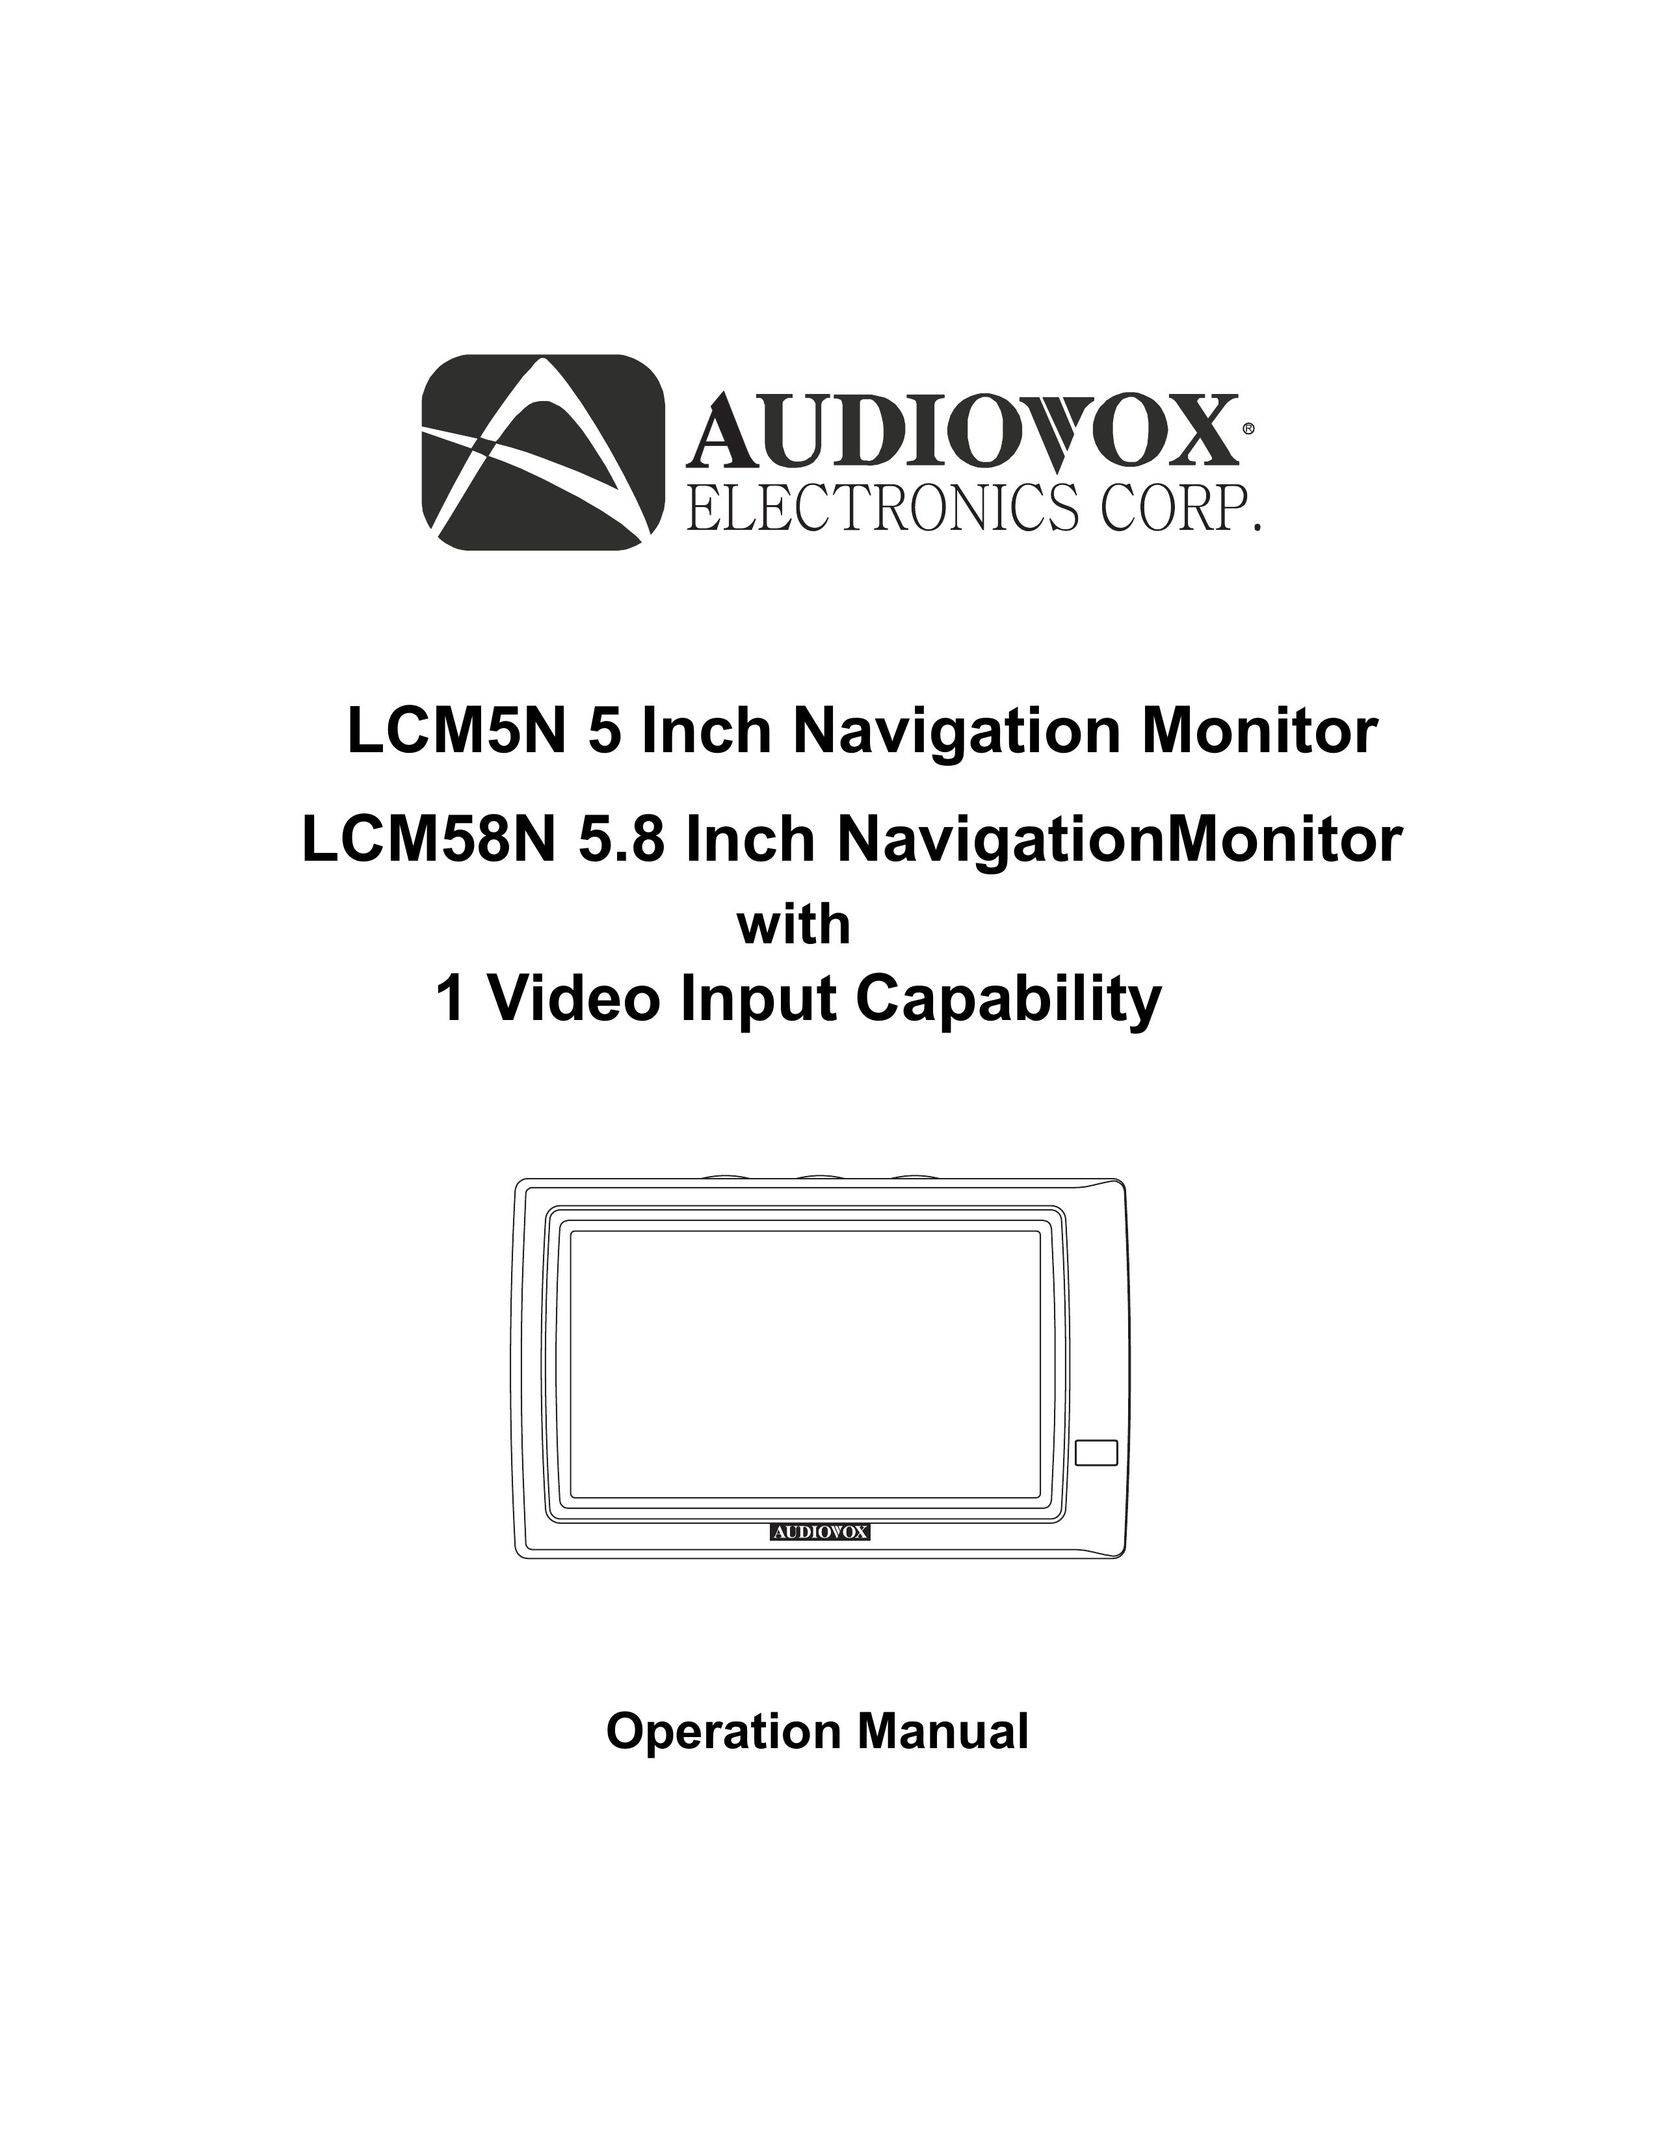 Audiovox LCM5N Computer Monitor User Manual